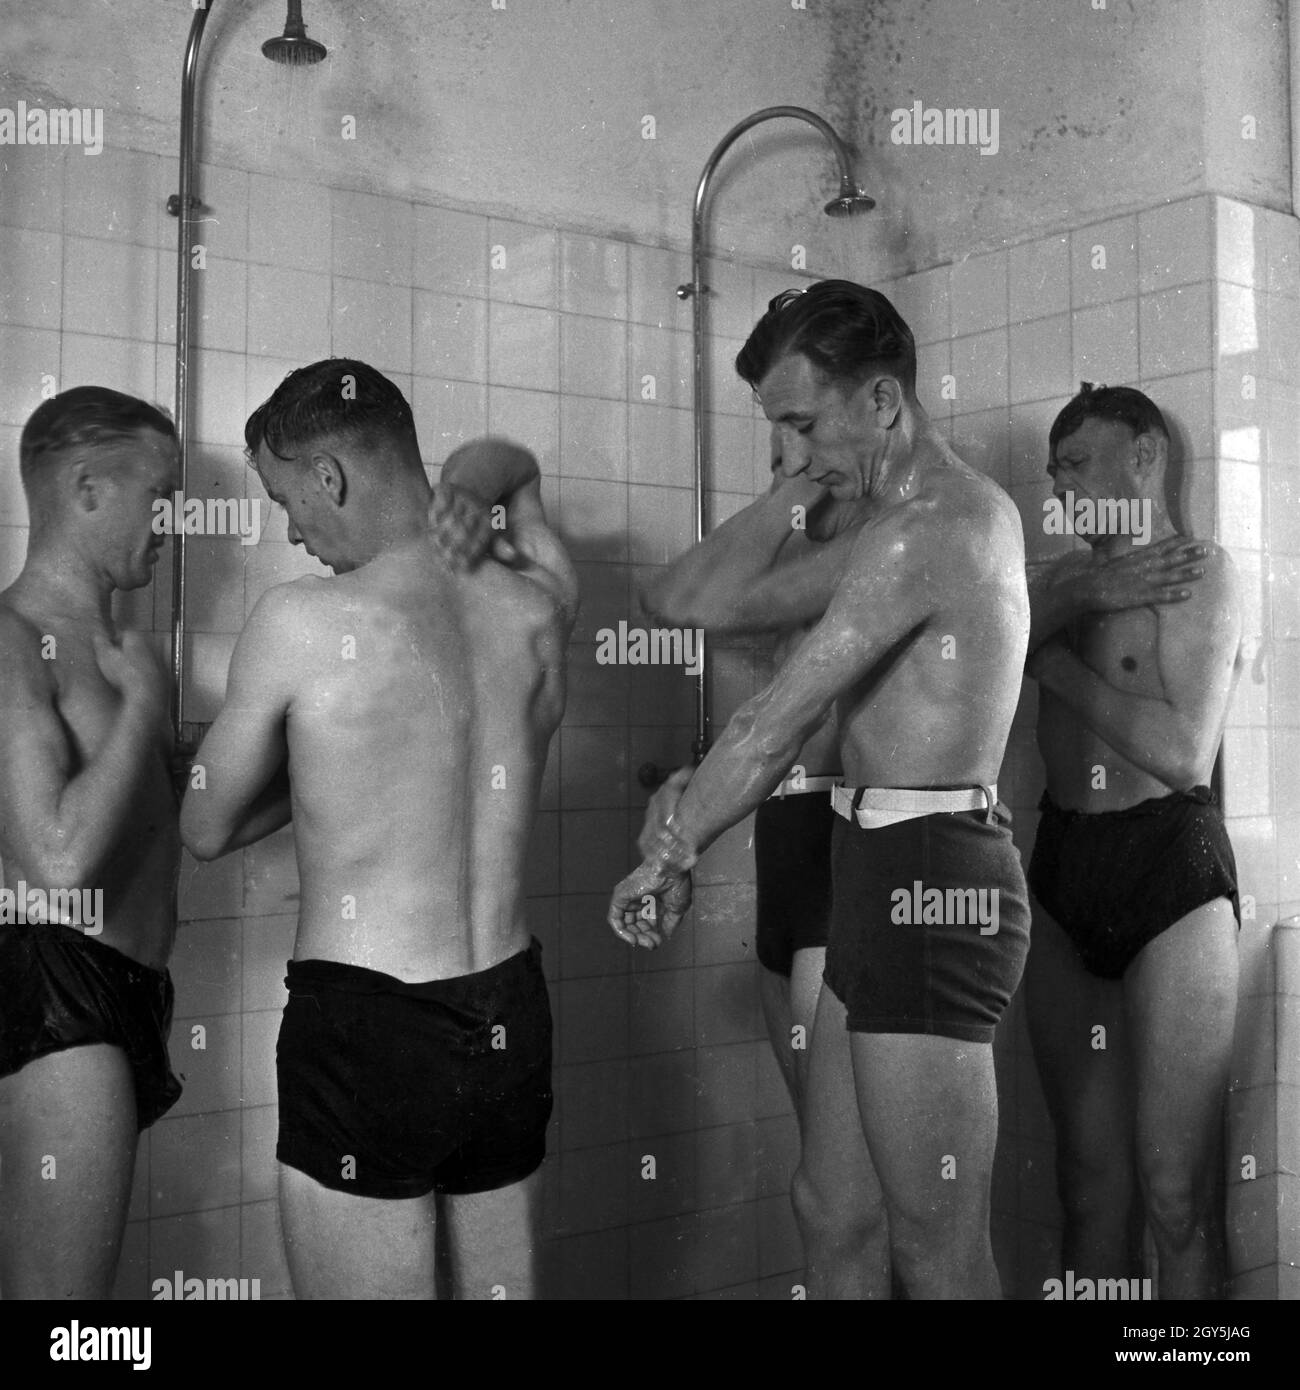 Original-Bildunterschrift : Mannschaften beim Duschen, Deutschland 1940er Jahre. Les hommes de prendre une douche, de l'Allemagne des années 40. Banque D'Images